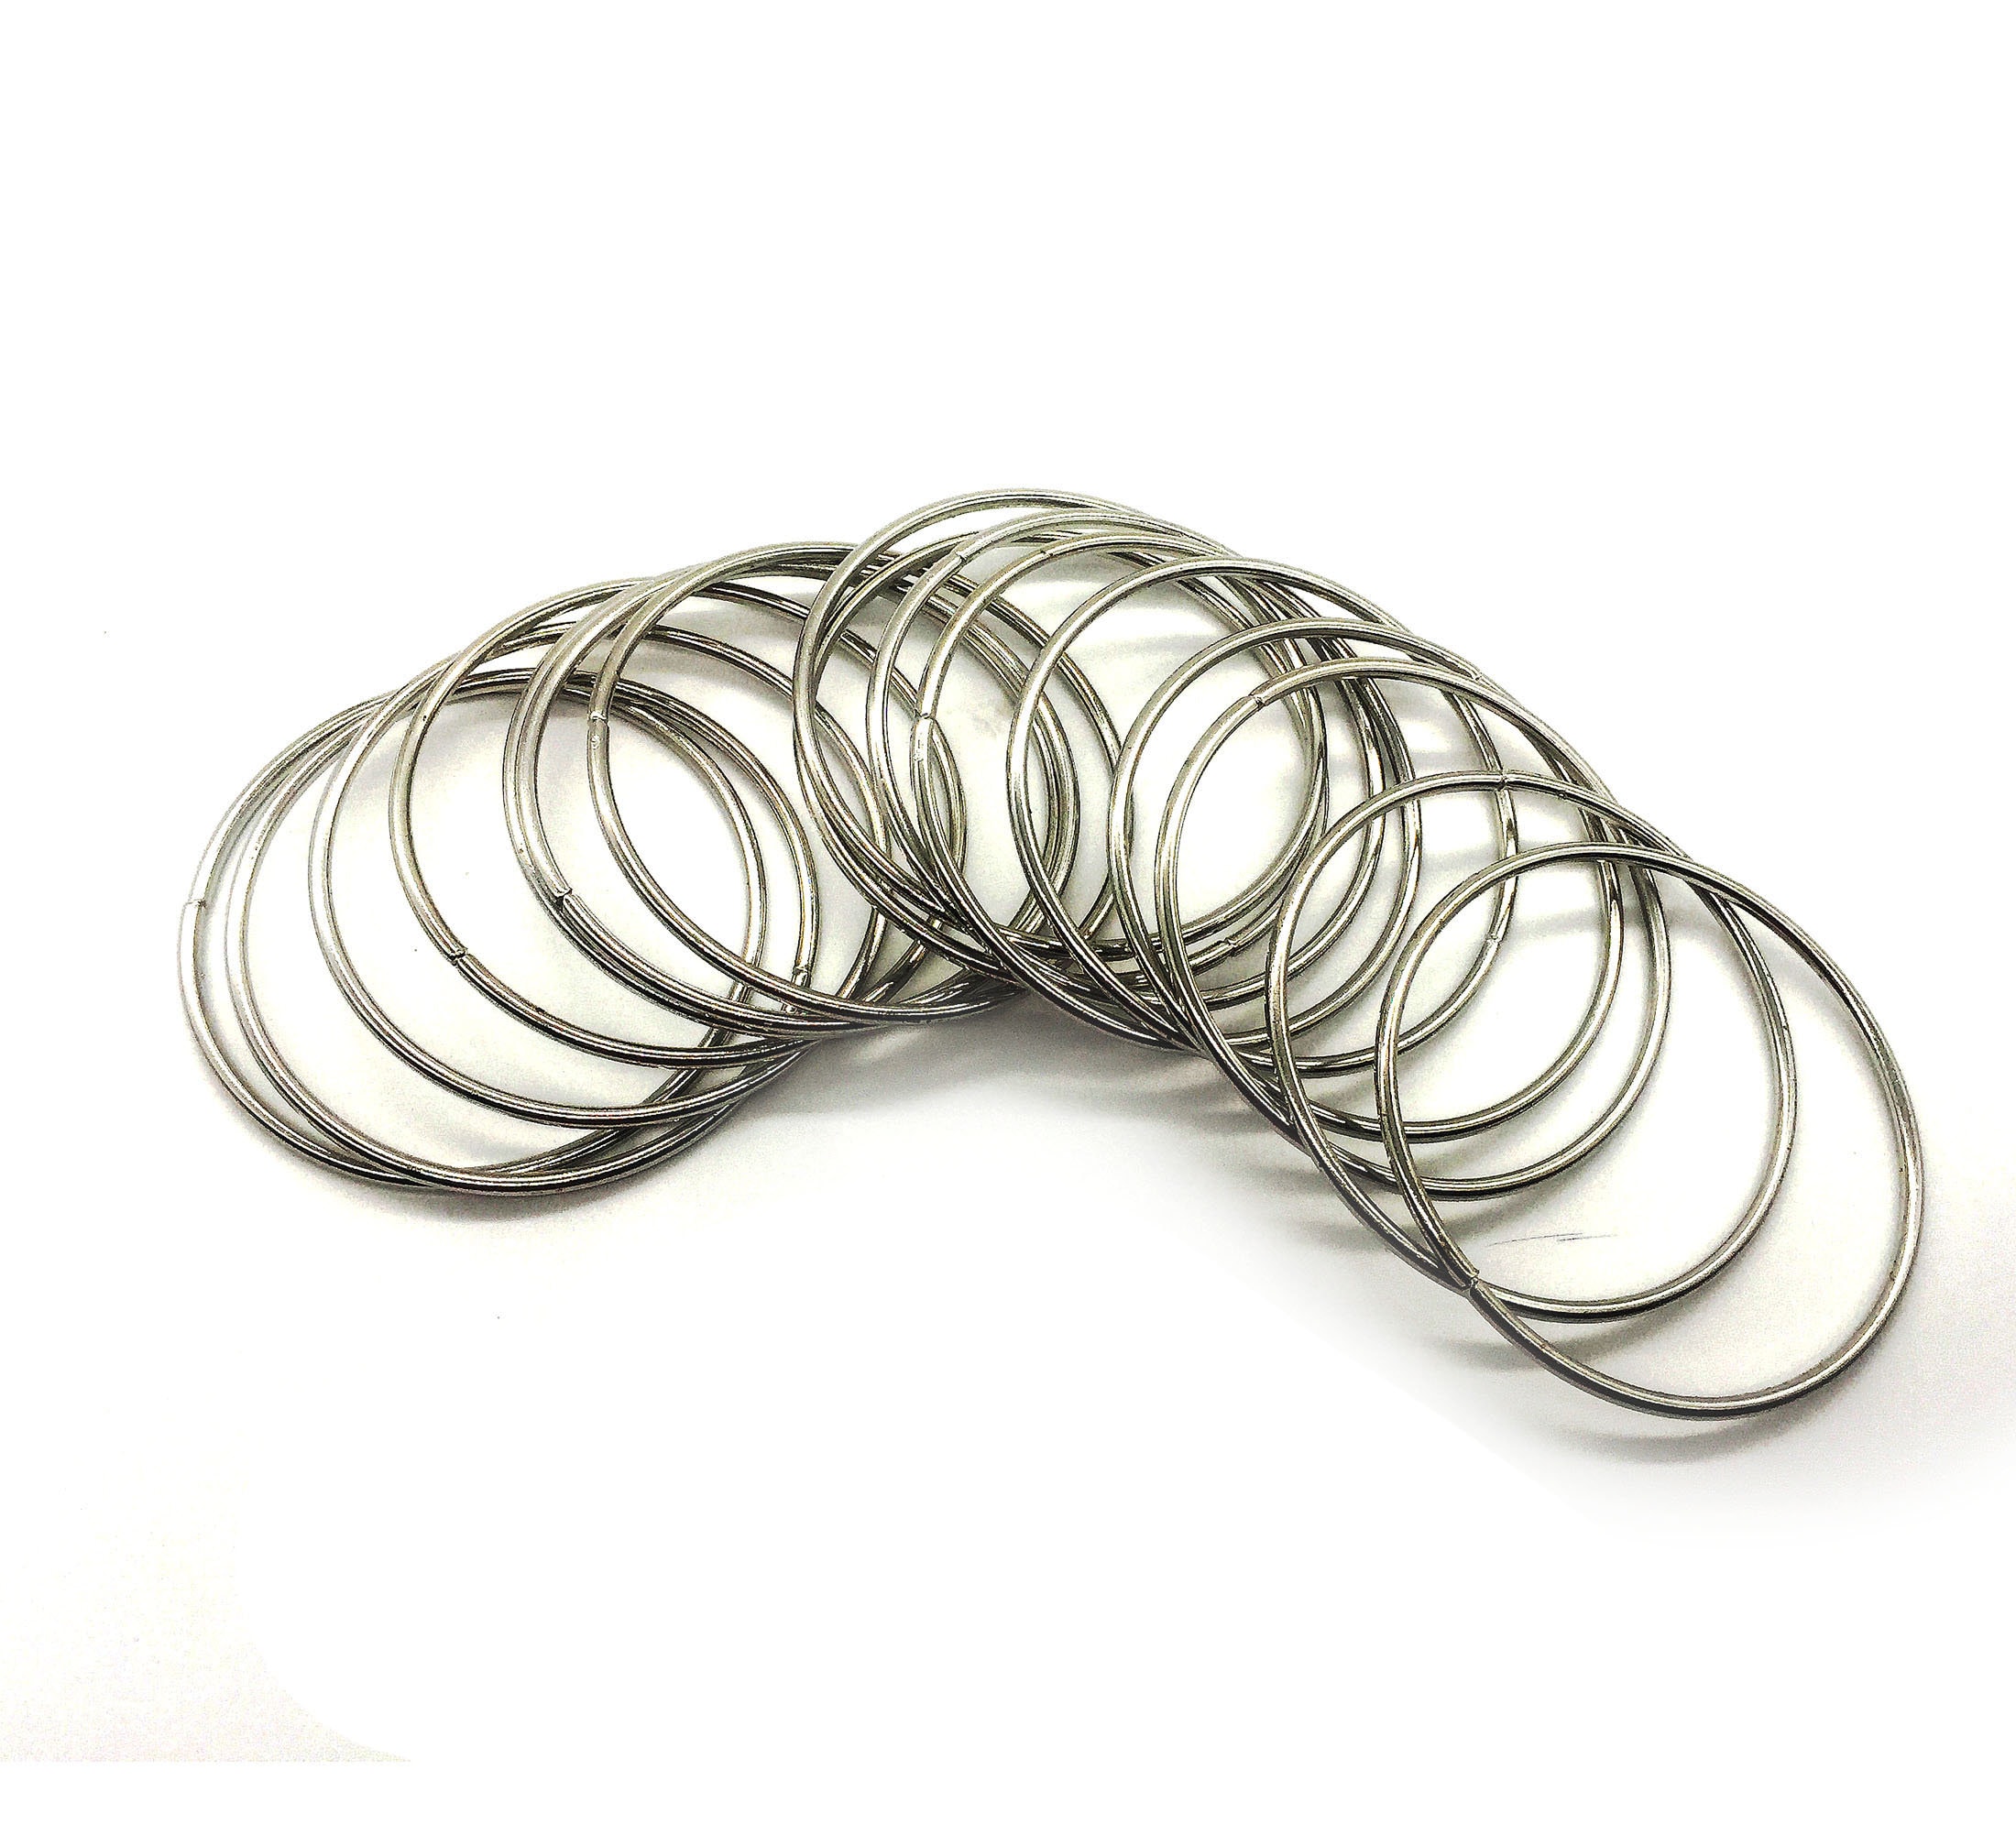 Silver Metal Rings for Crafts, Metal Rings for Macrame Hanging